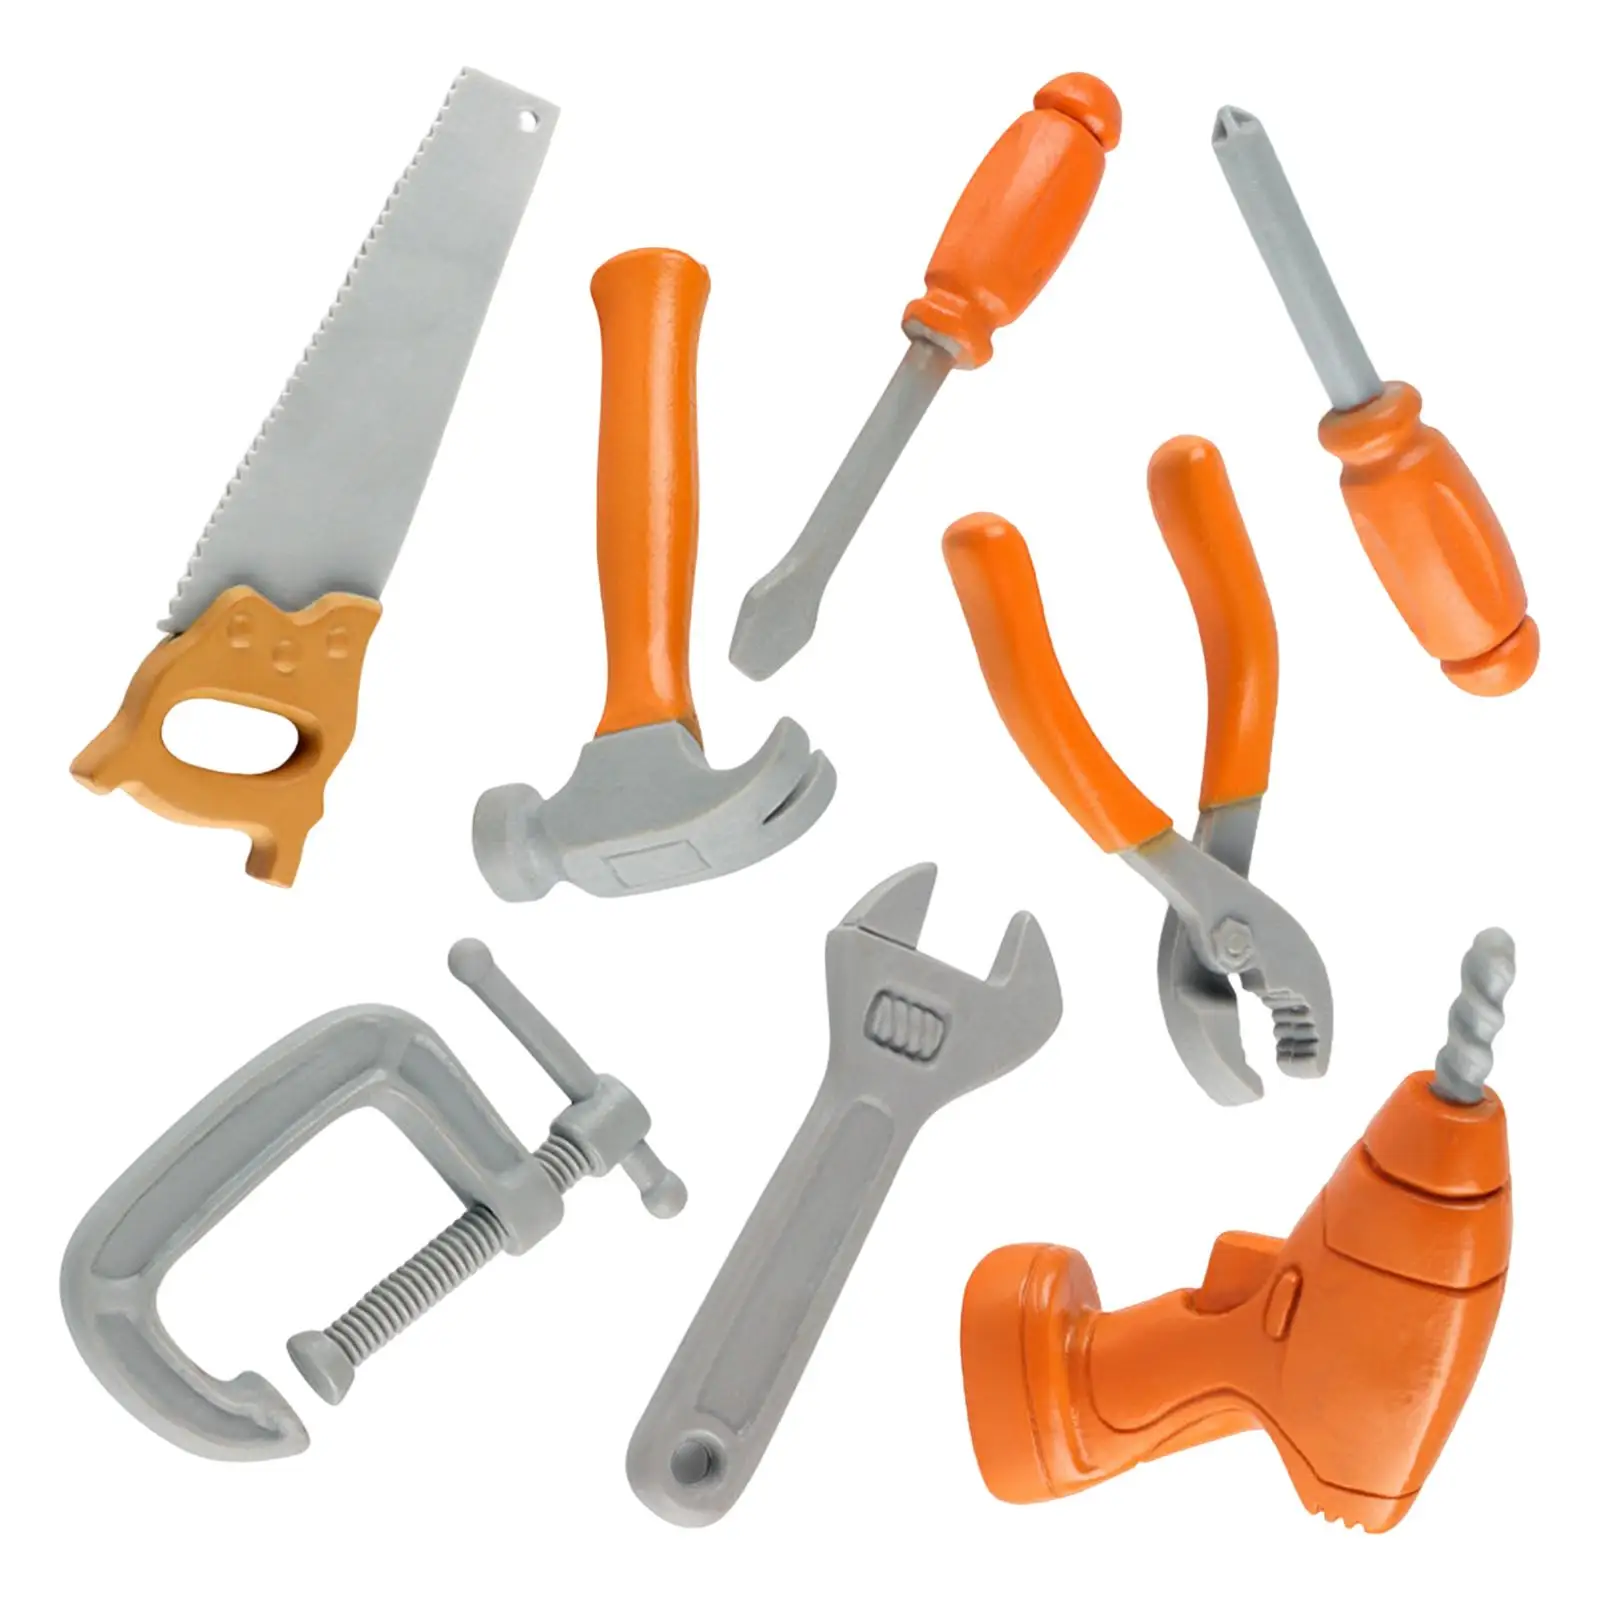 8x Pretend Play Tool Screwdriver, Wrench,Saw and Plier Set Montessori Play Tool Set for Kids Birthday Gift Preschool